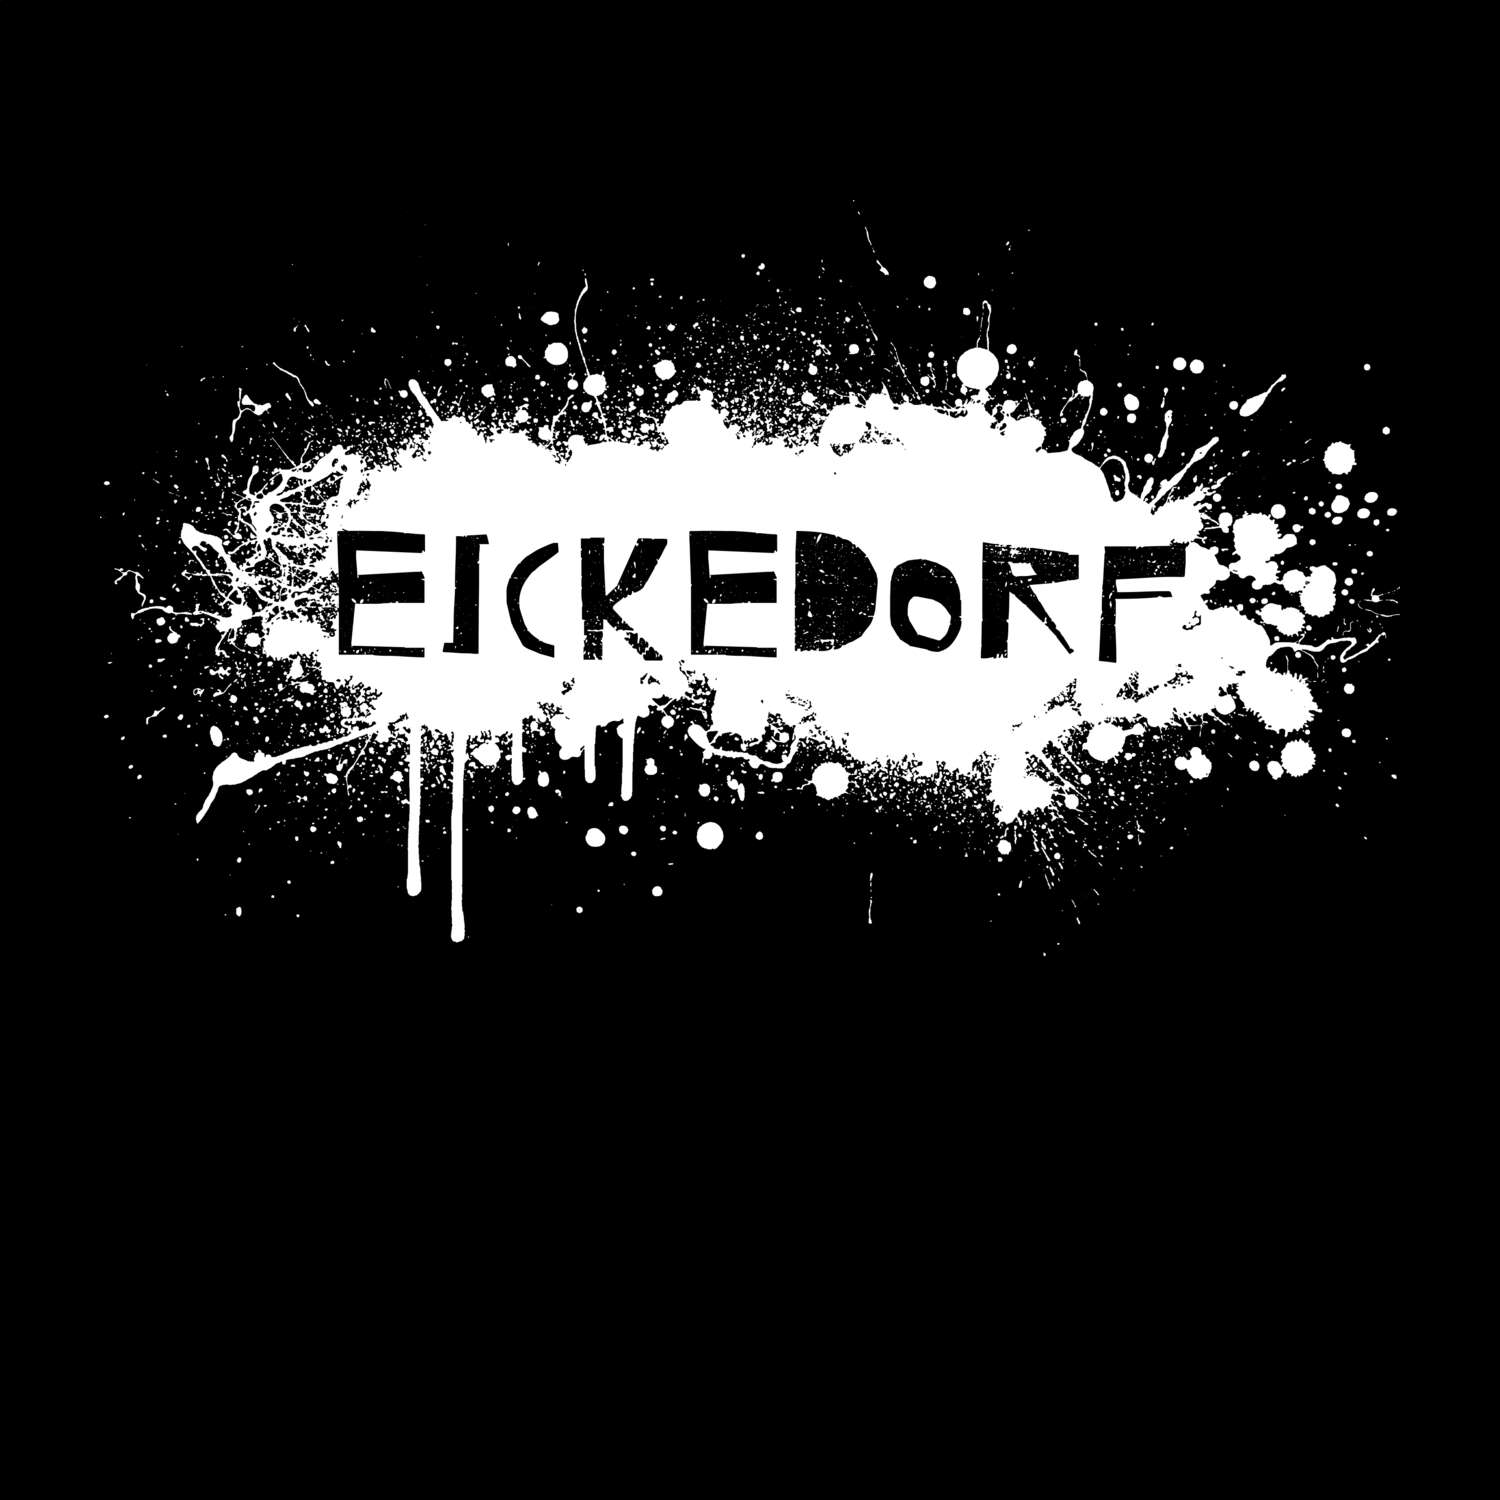 Eickedorf T-Shirt »Paint Splash Punk«